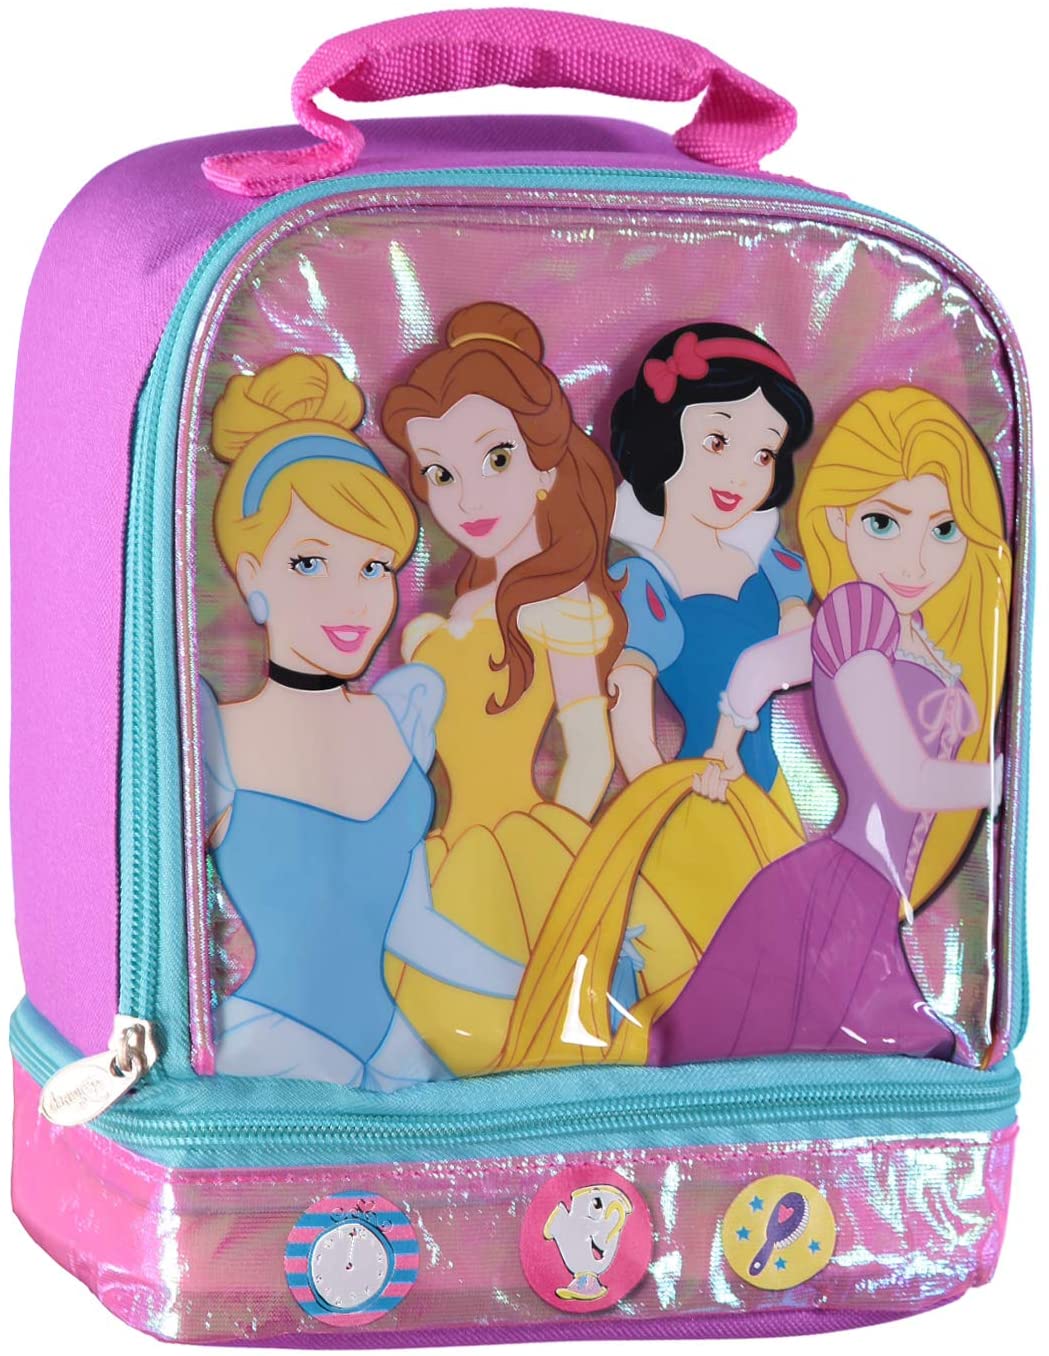 Disney Princess Lunch Box (V6) by Jack1set2 on DeviantArt